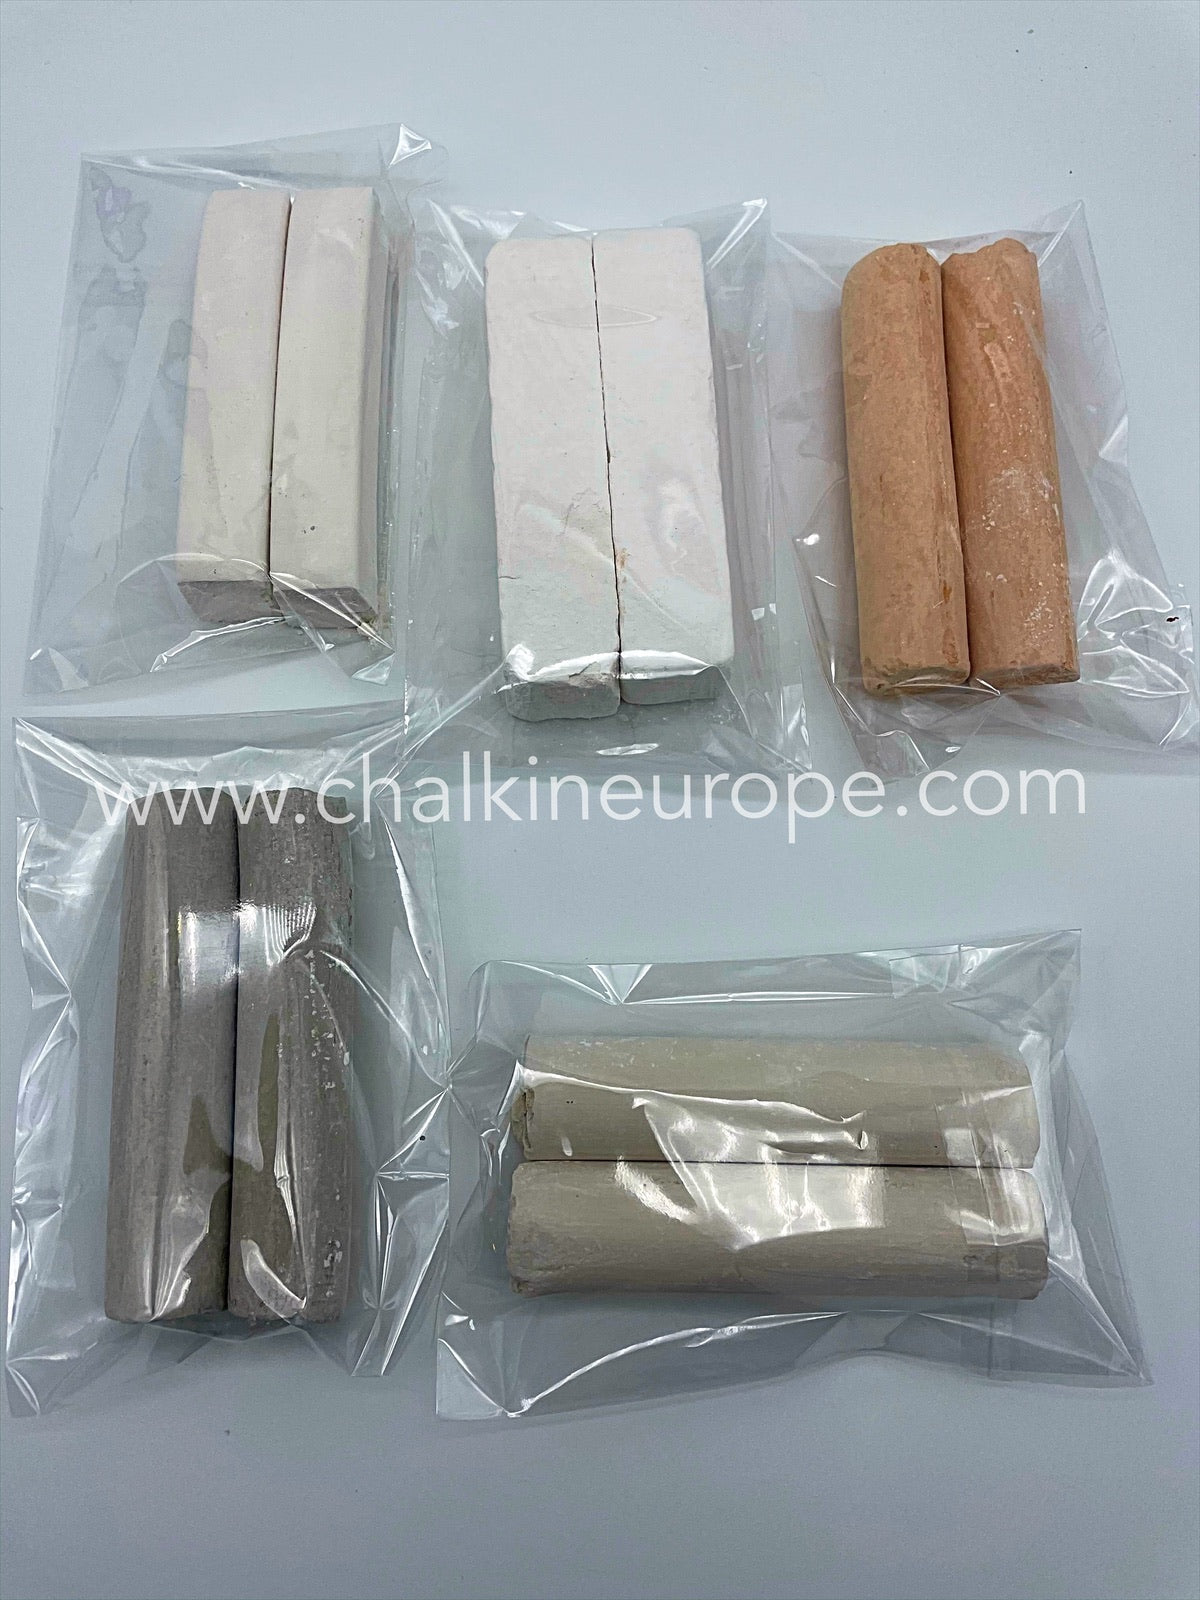 食用粘土の種類 - Chalkineurope